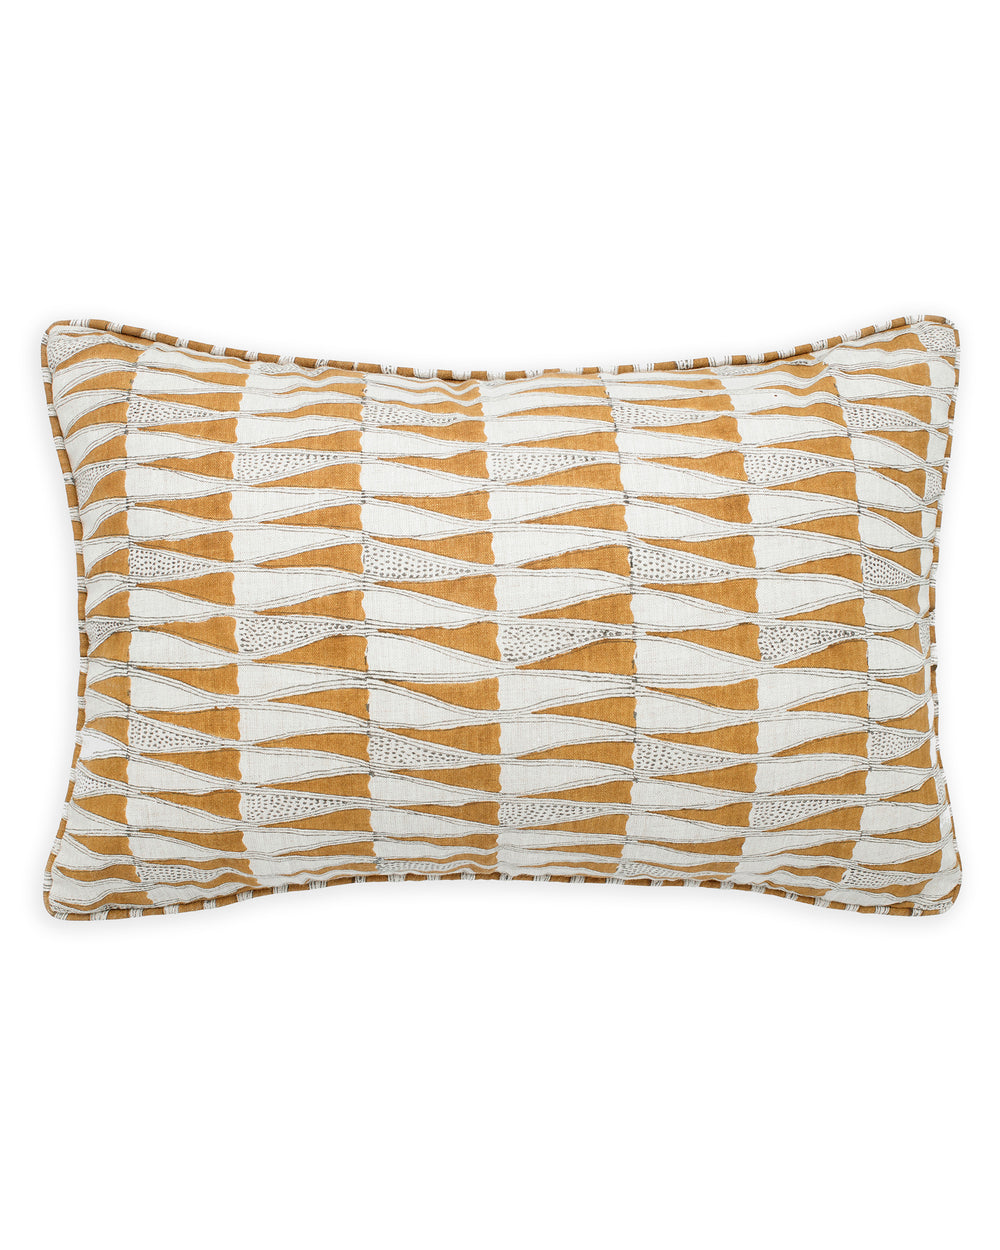 Tangier Saffron Pillow